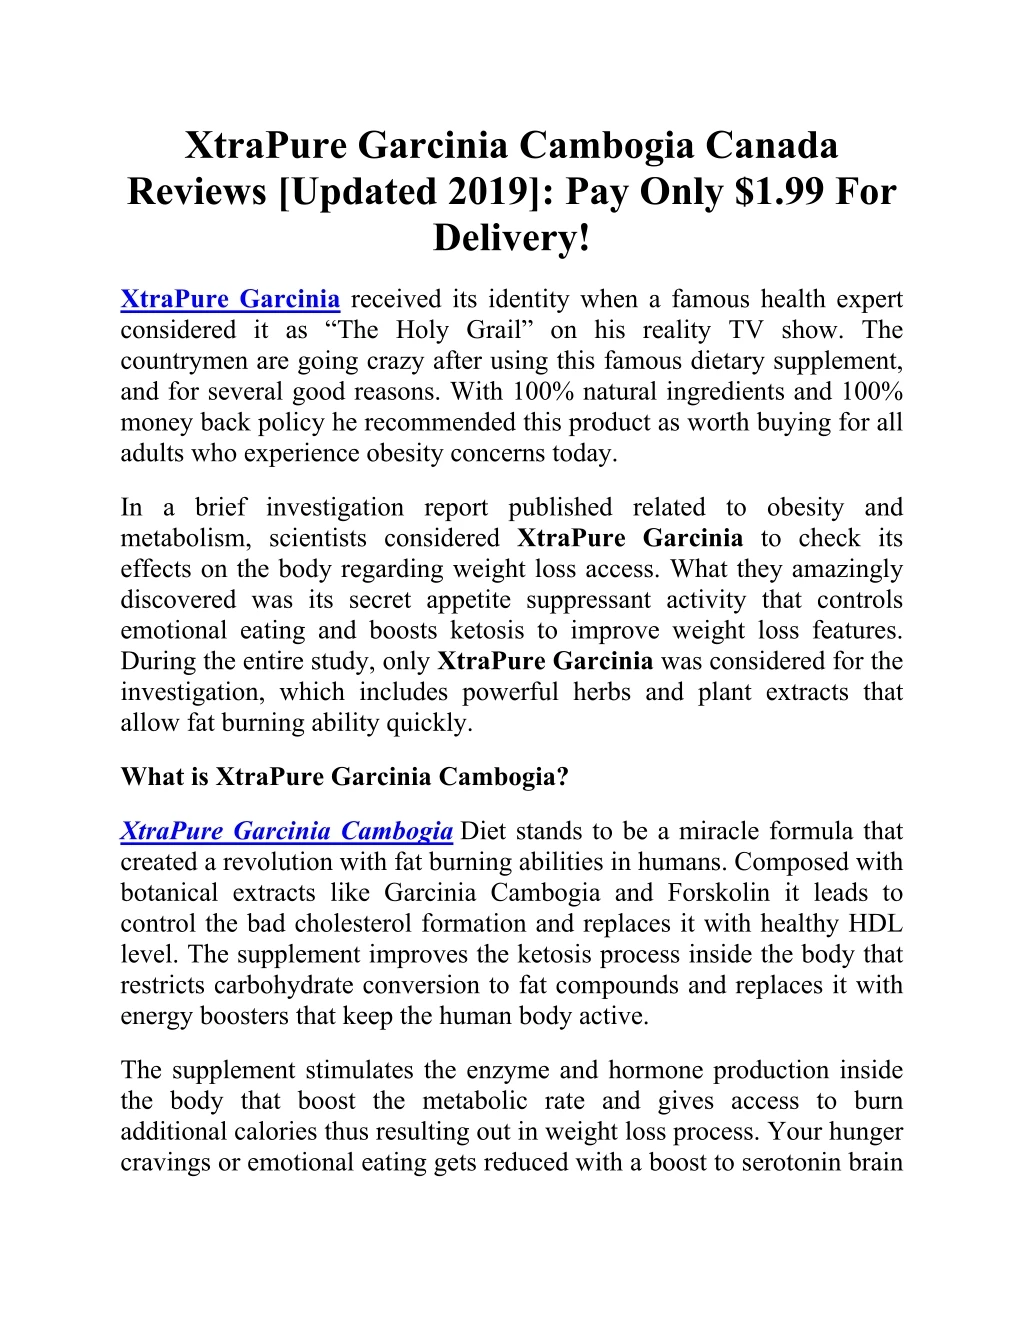 xtrapure garcinia cambogia canada reviews updated